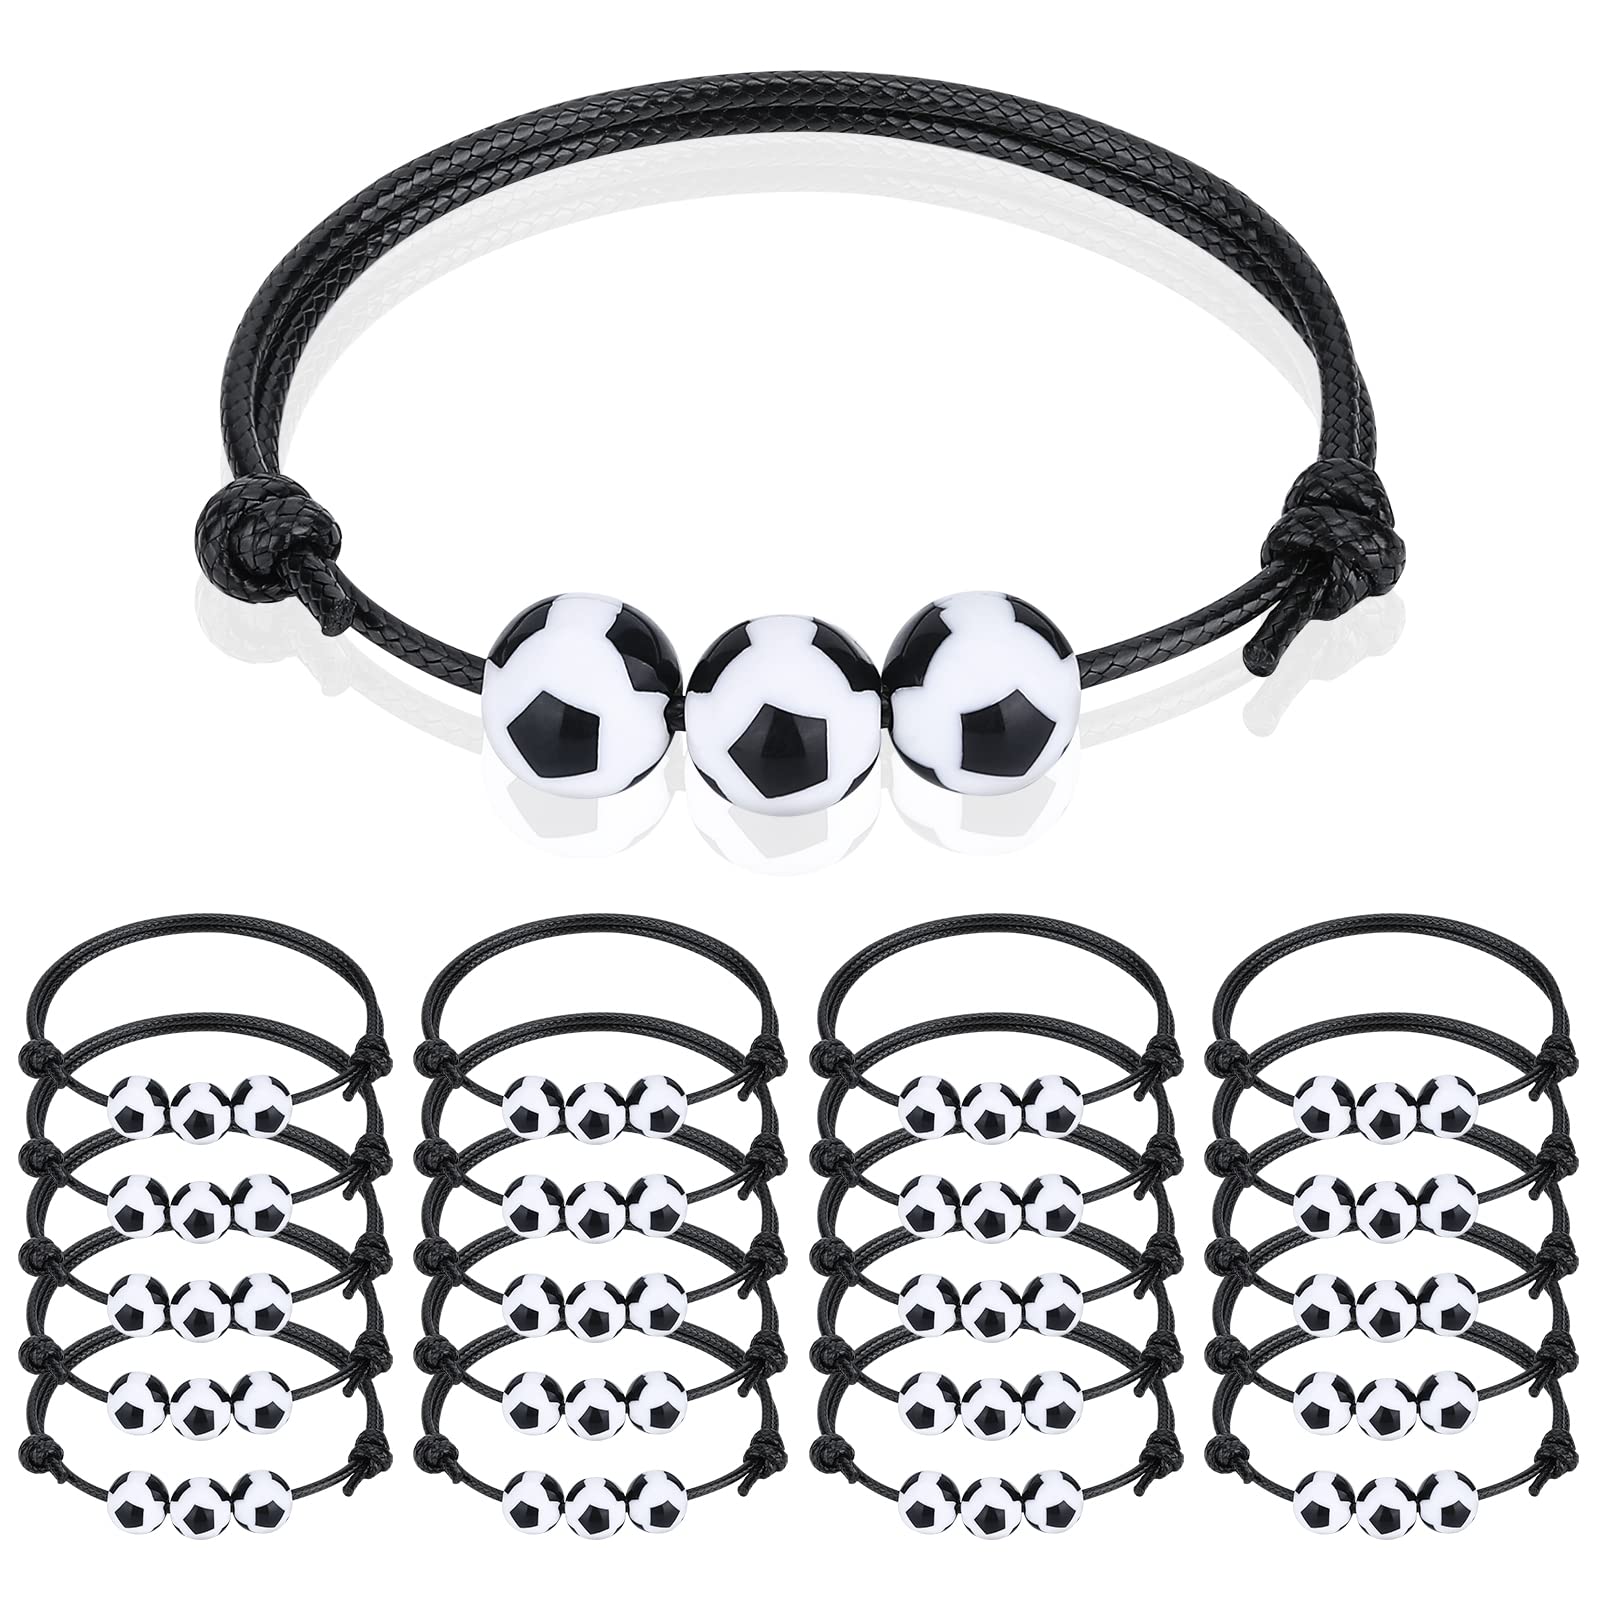 20 Pcs Sport Theme Charm Bracelets,Soccer Basketball Football